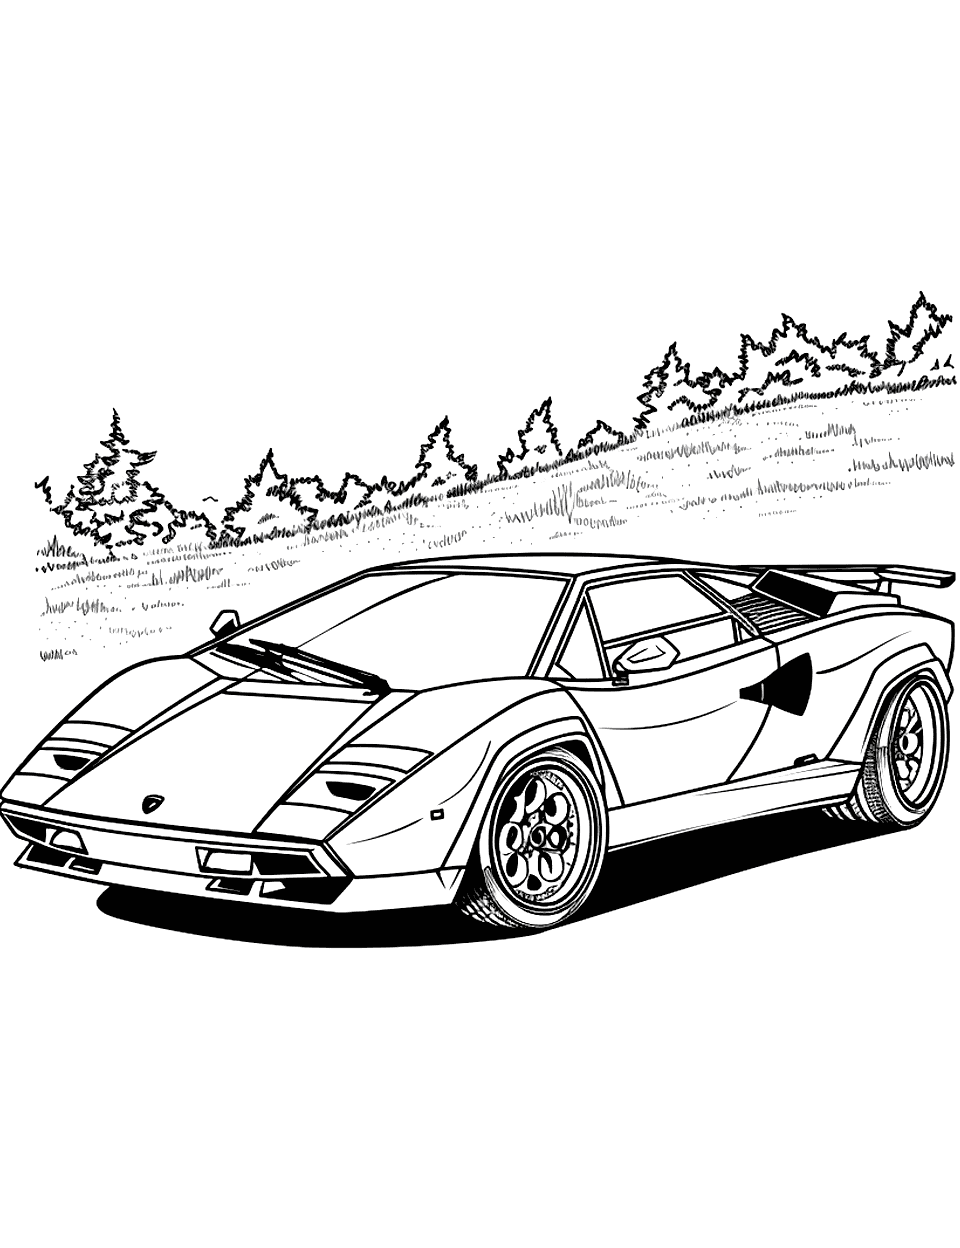 Vintage Voyage Lamborghini Coloring Page - A vintage Lamborghini on a road trip through the countryside.